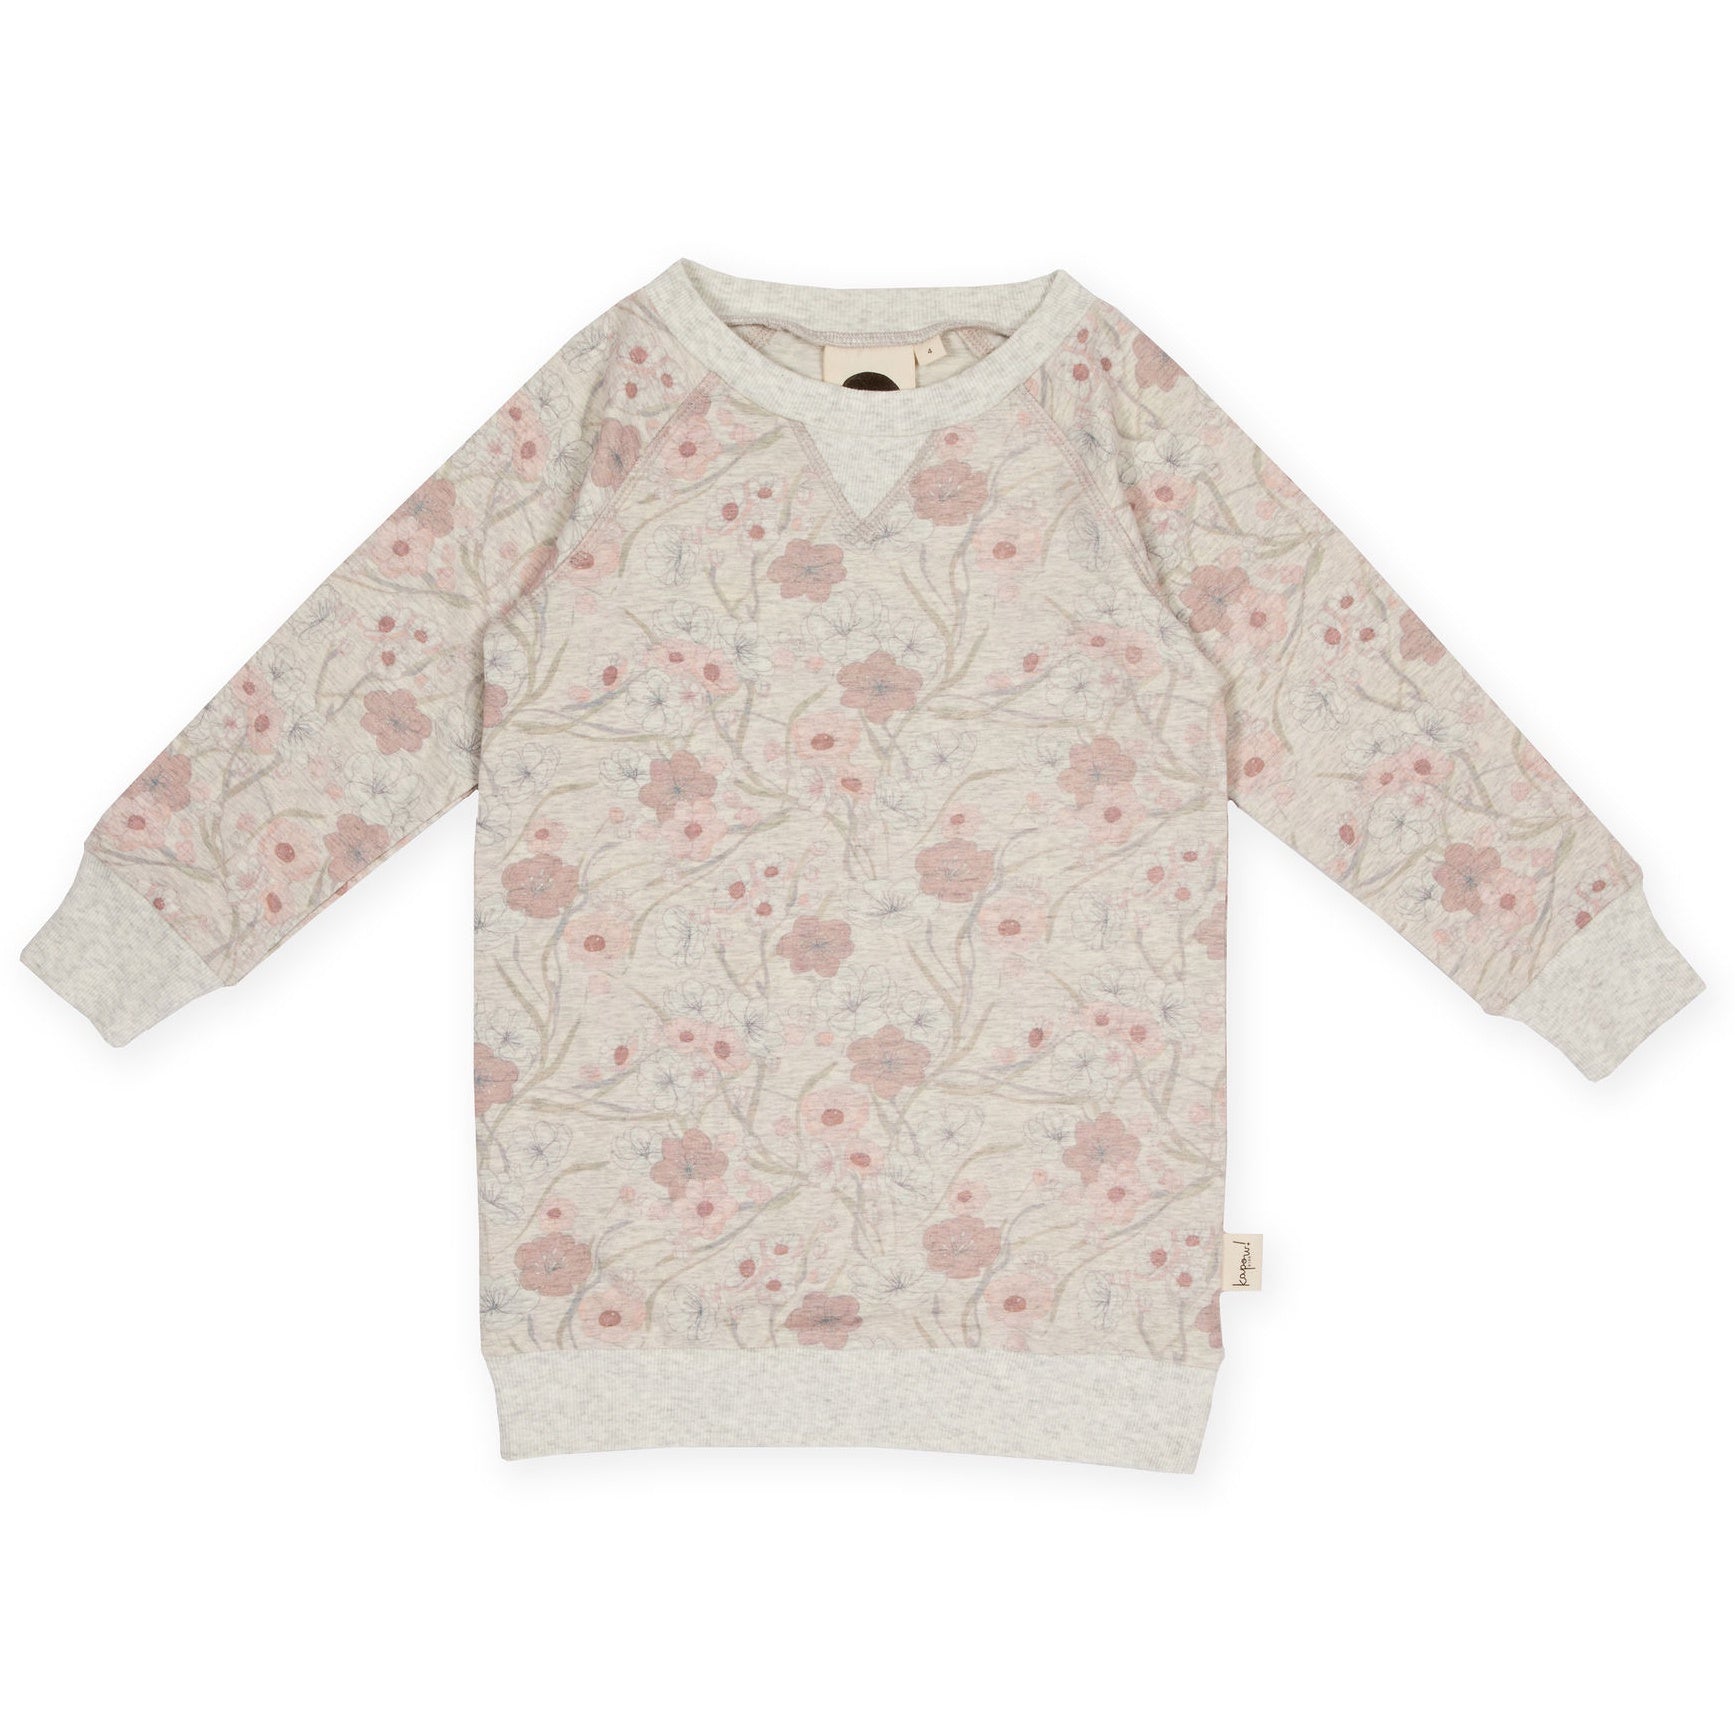 Kapow Kids - Cherry Blossom Sweater Dress